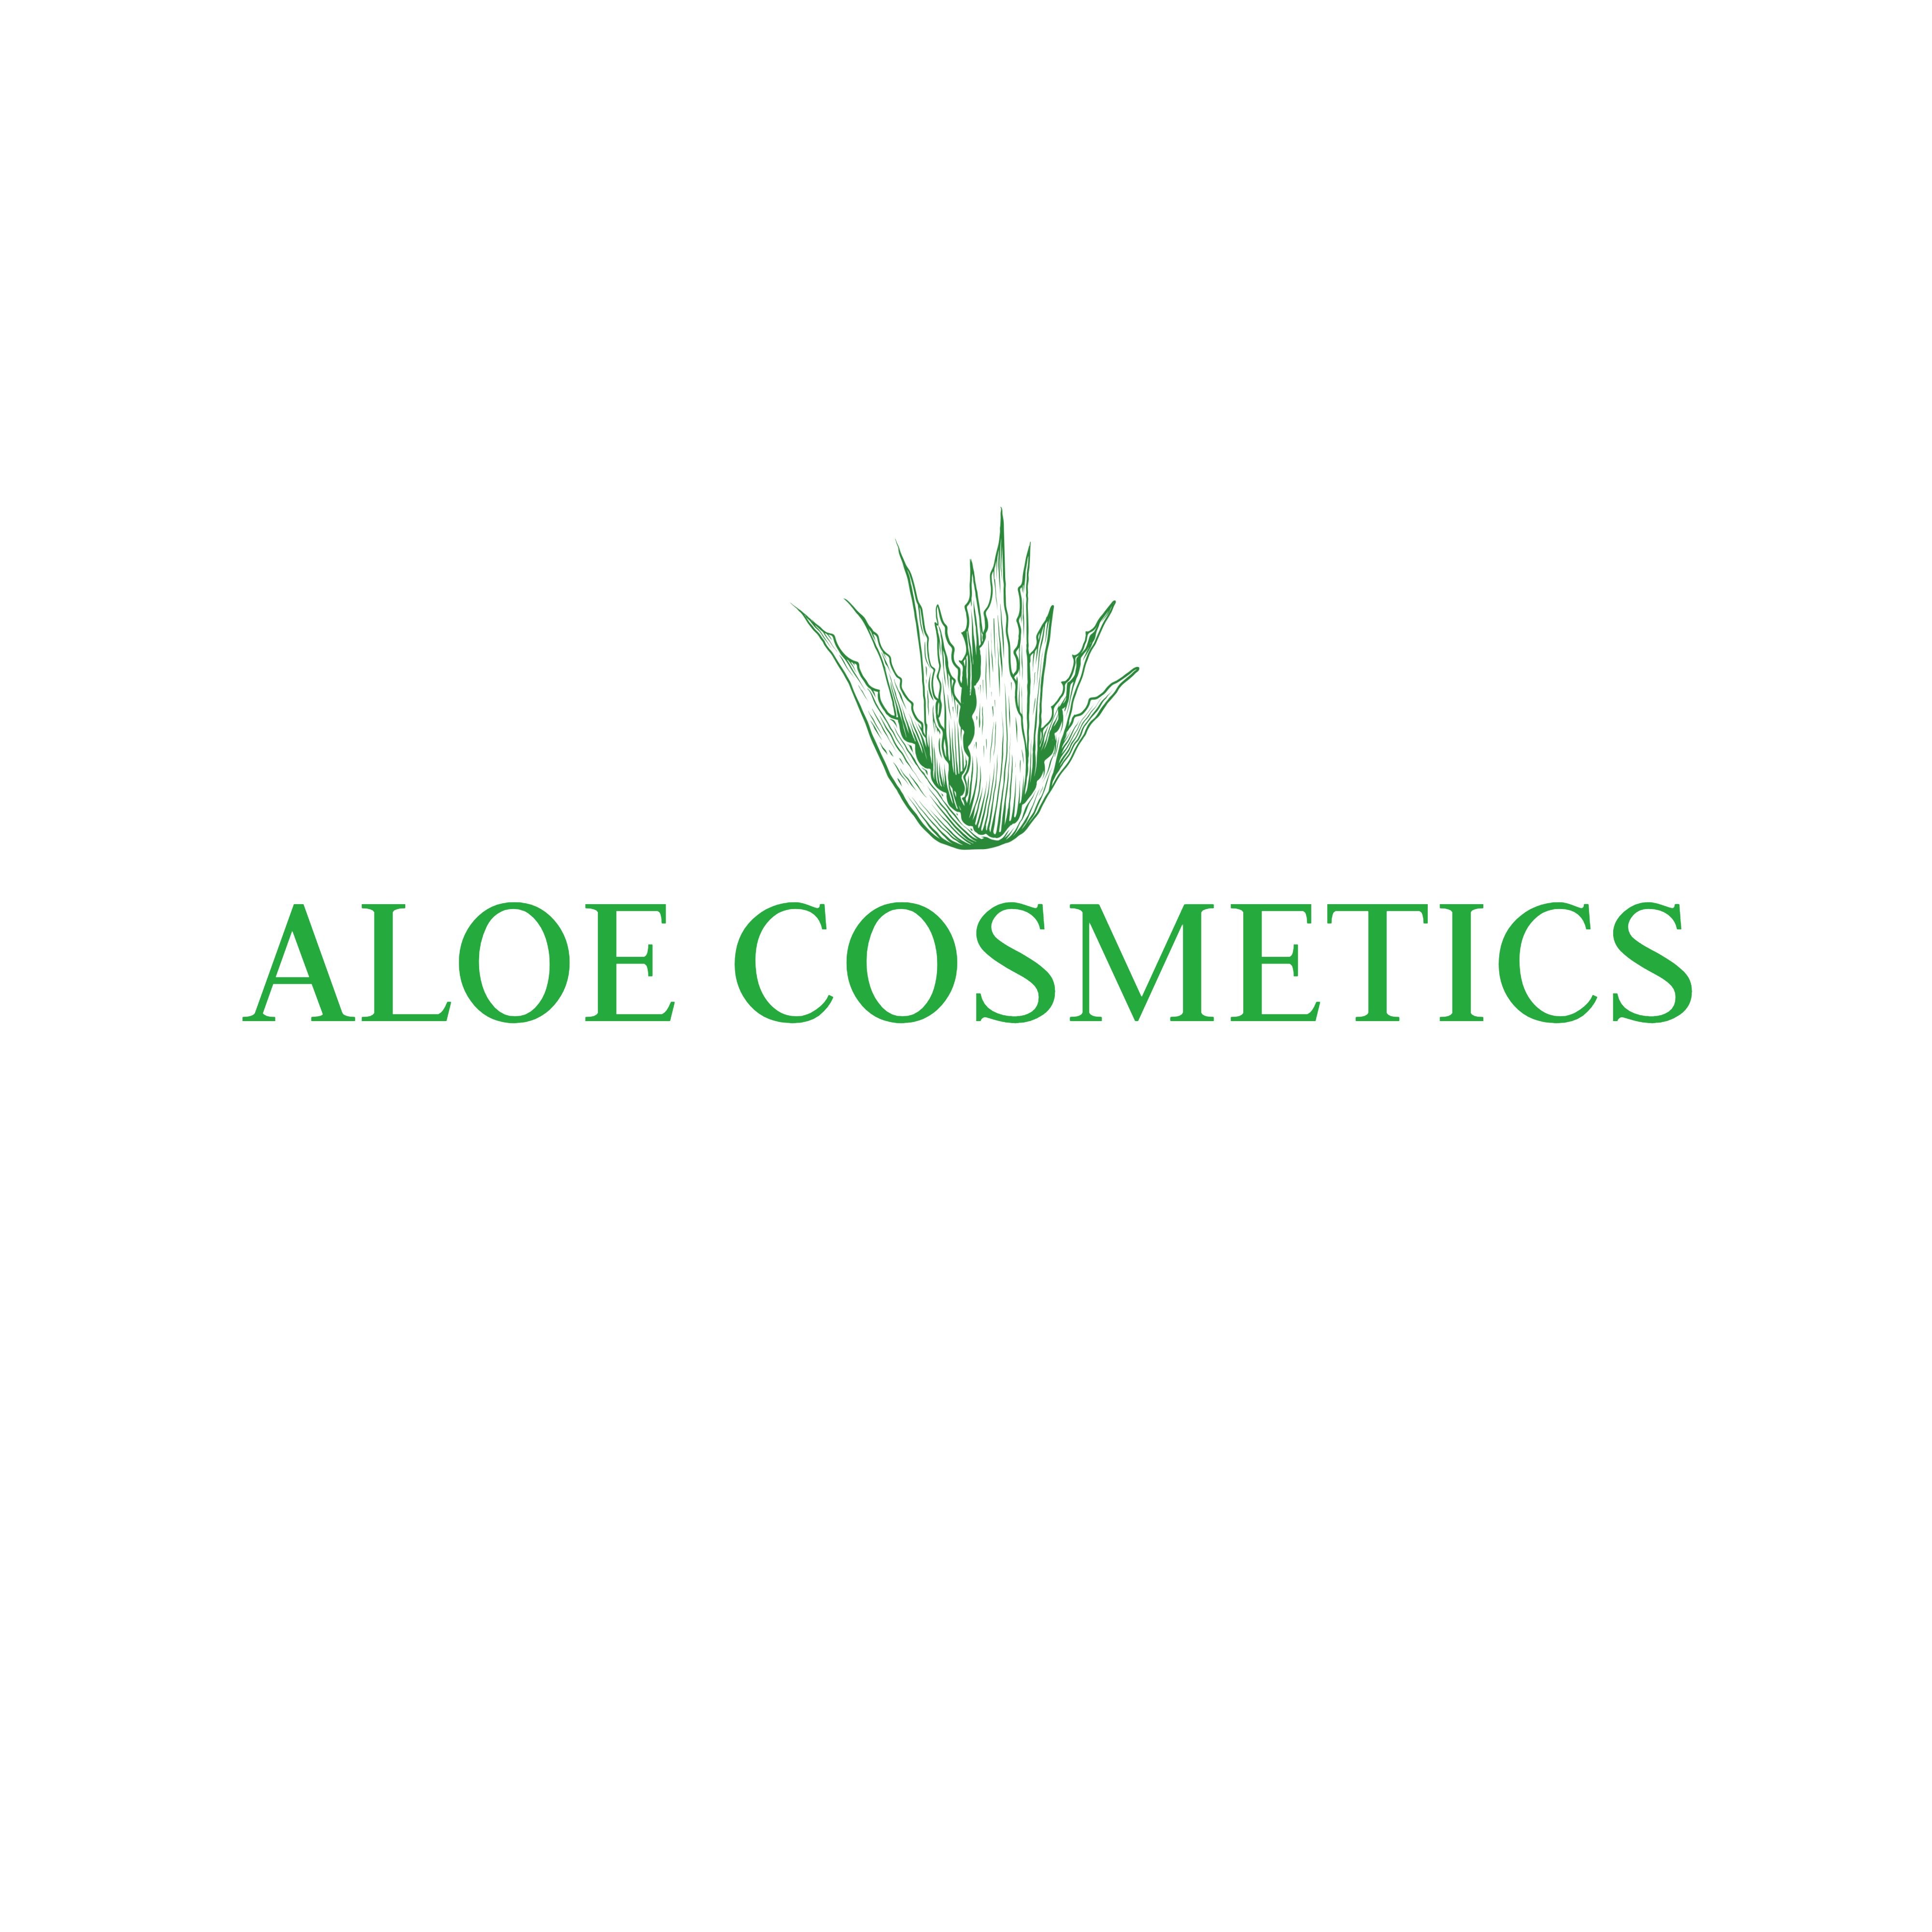 The Aloe Cosmetics